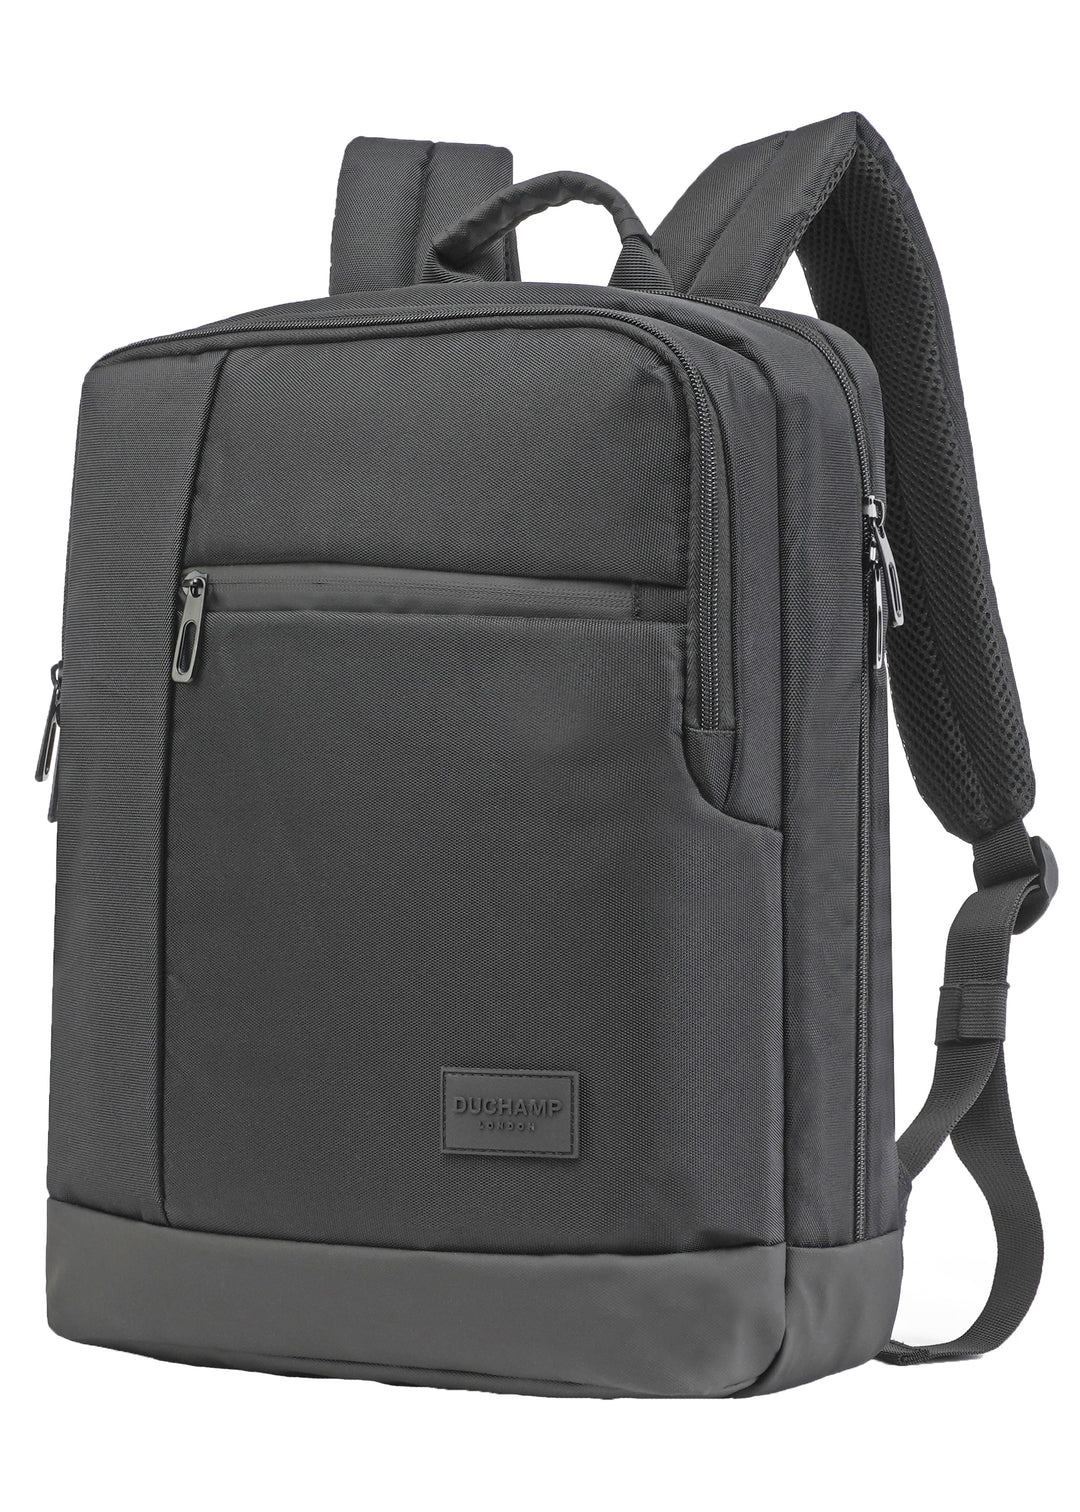 Duchamp Laptop Backpack